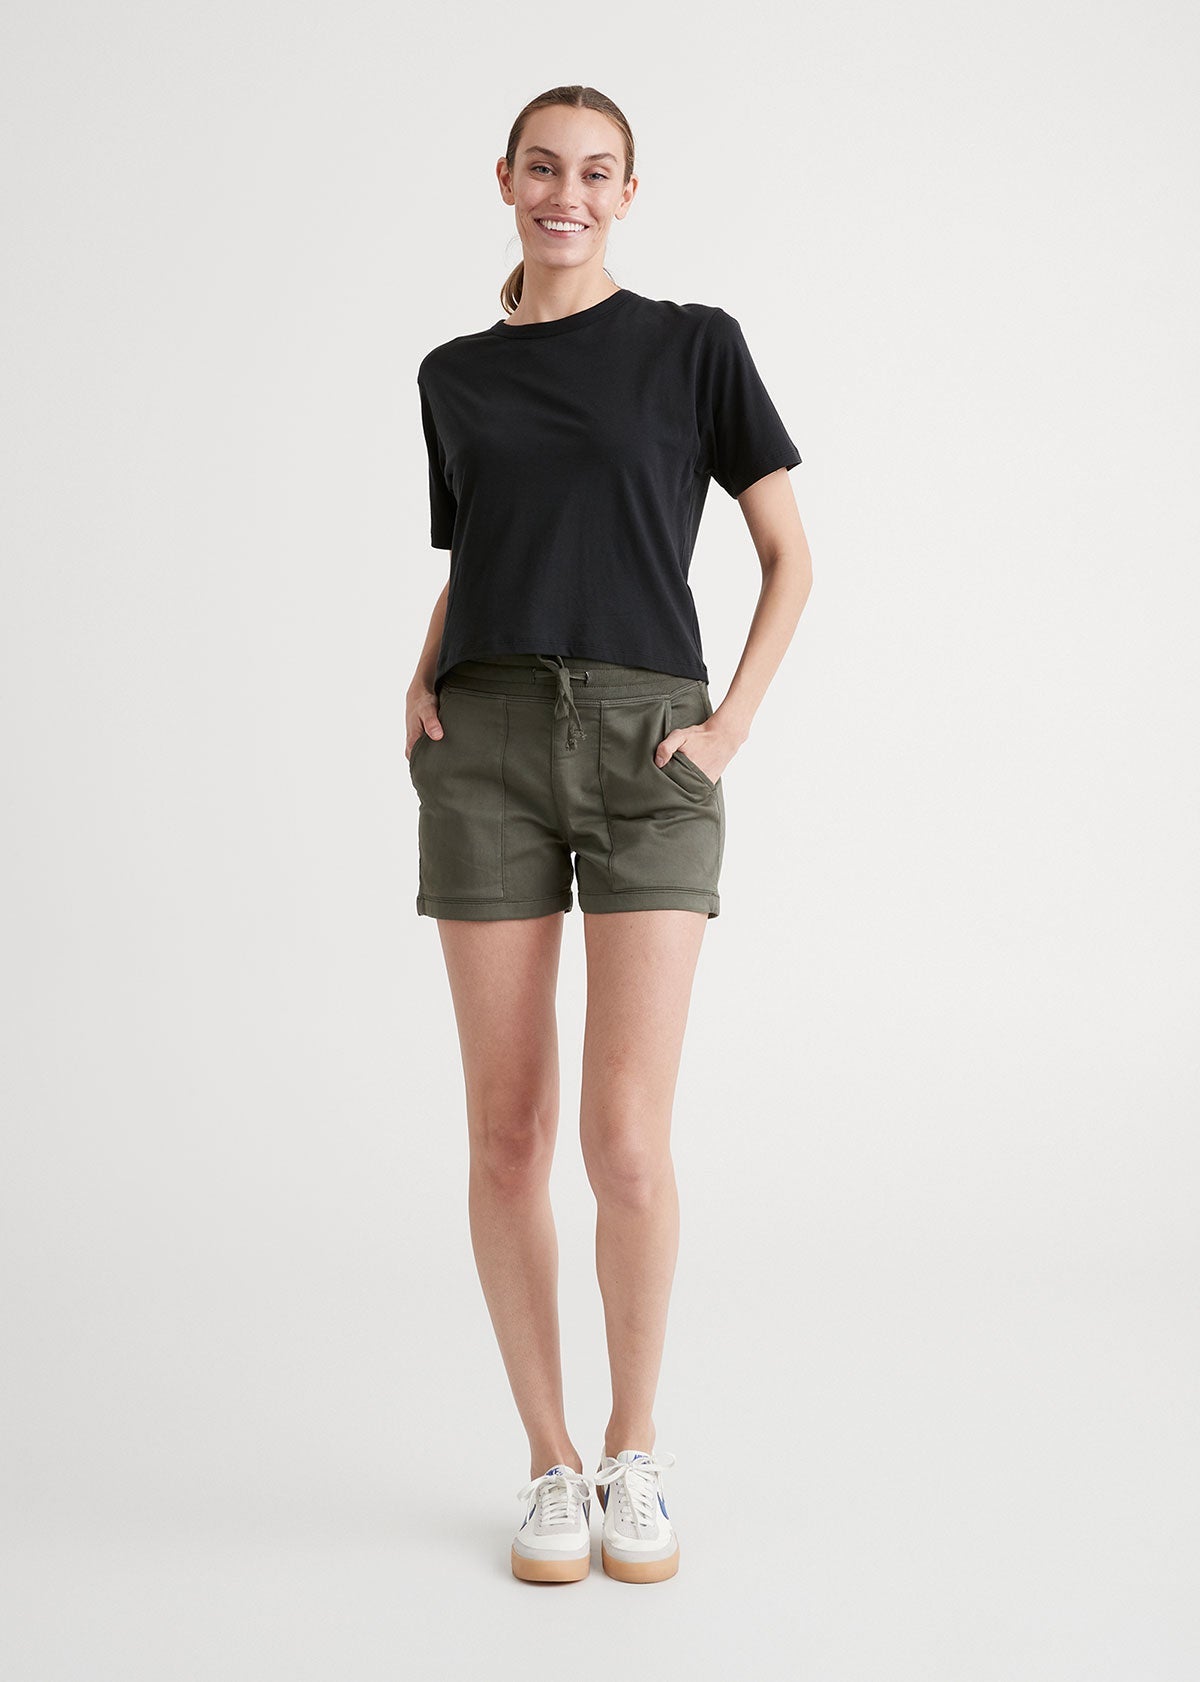 EcoCare seamless stretch shorts